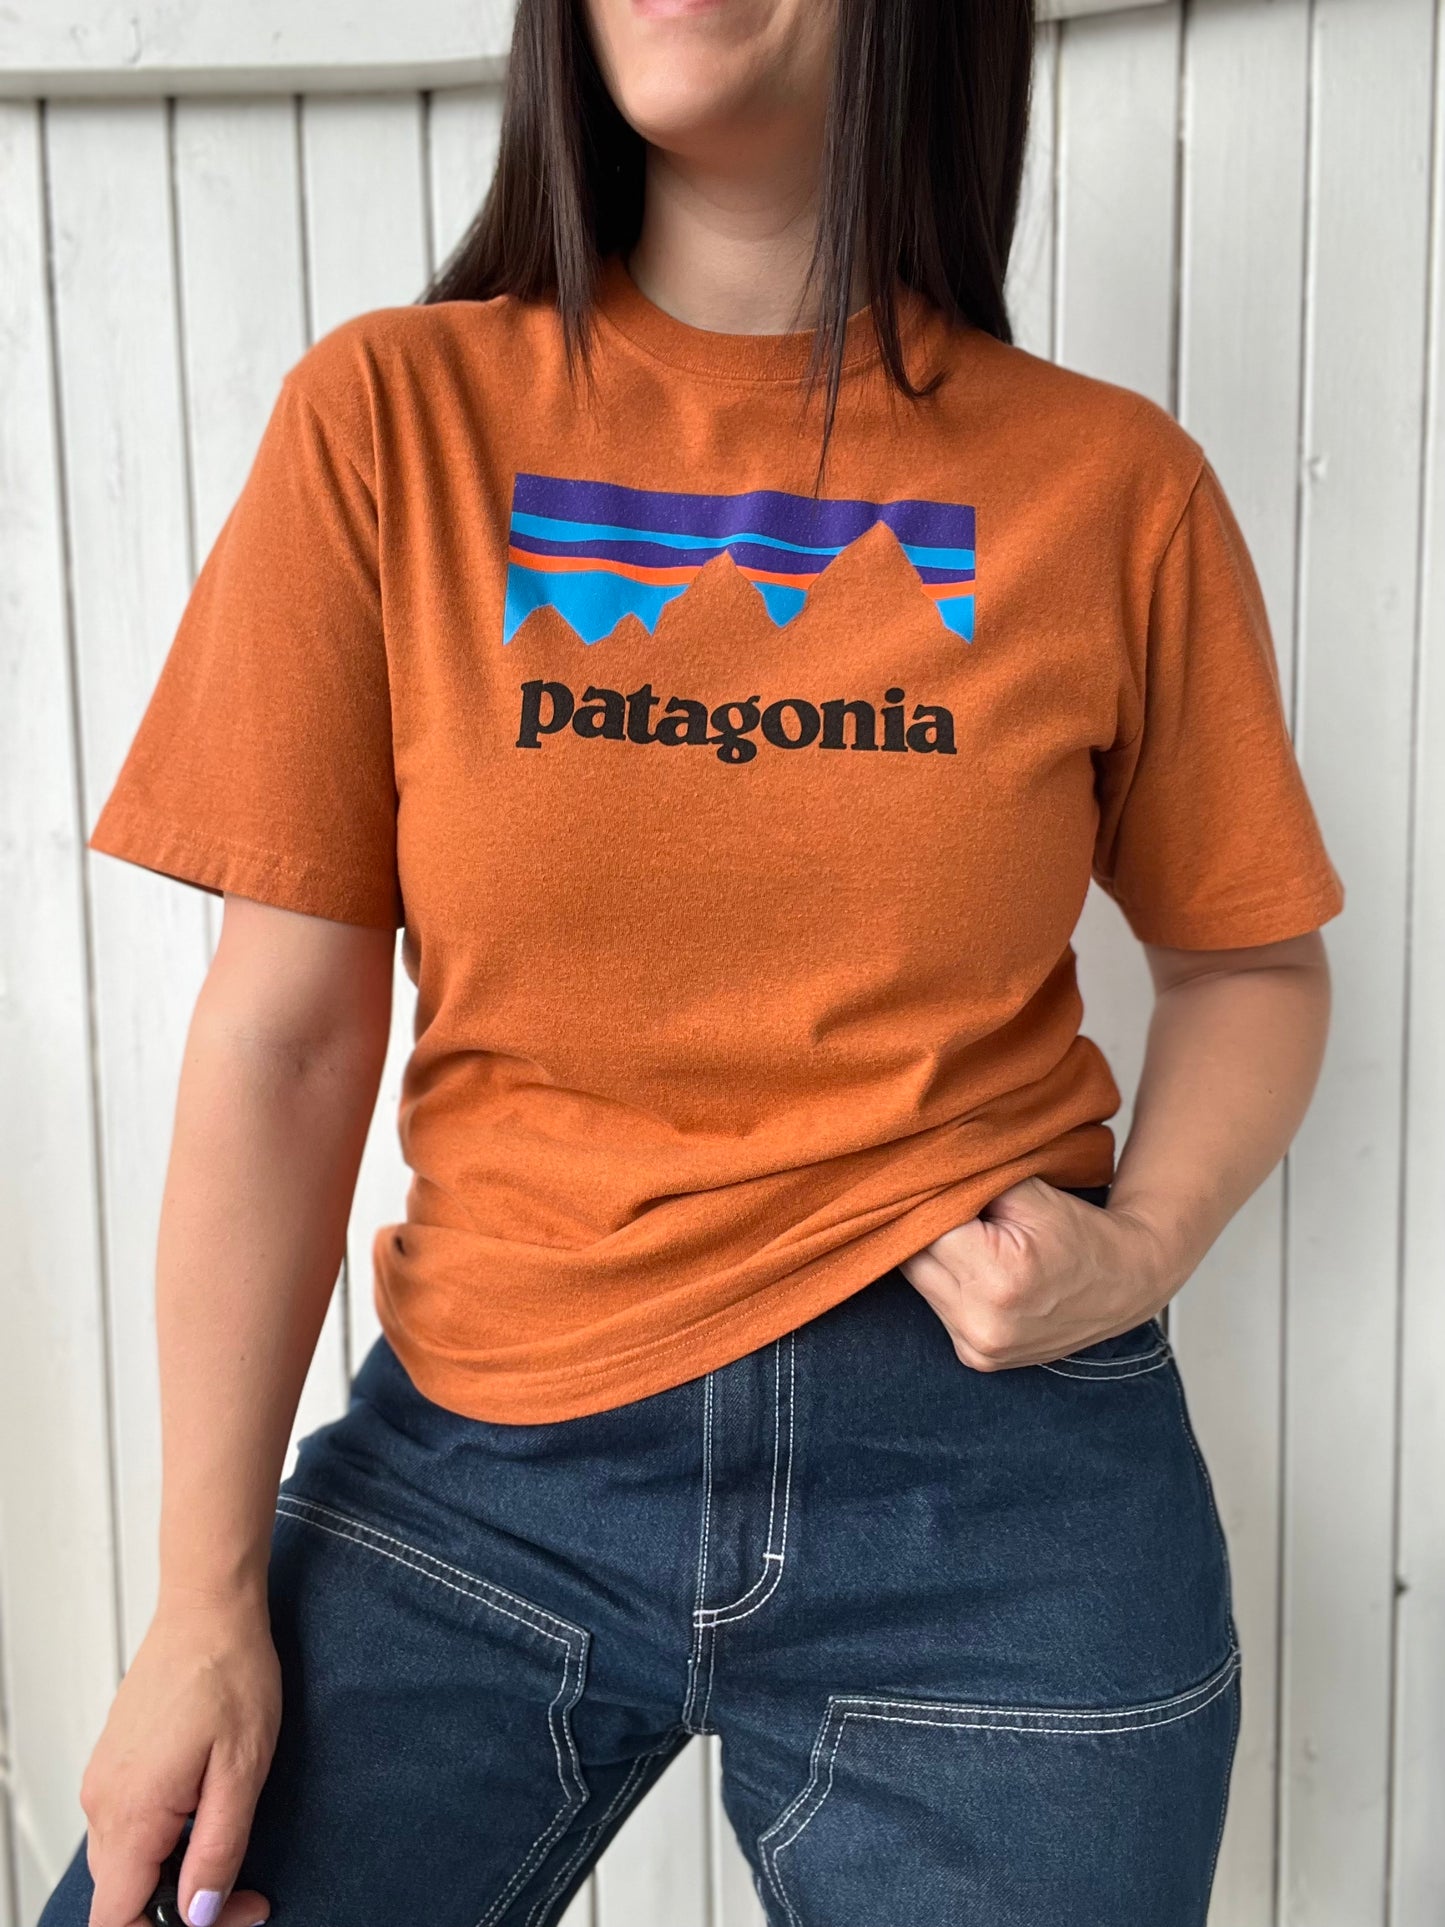 Patagonia Responsibili-Tee - Size M